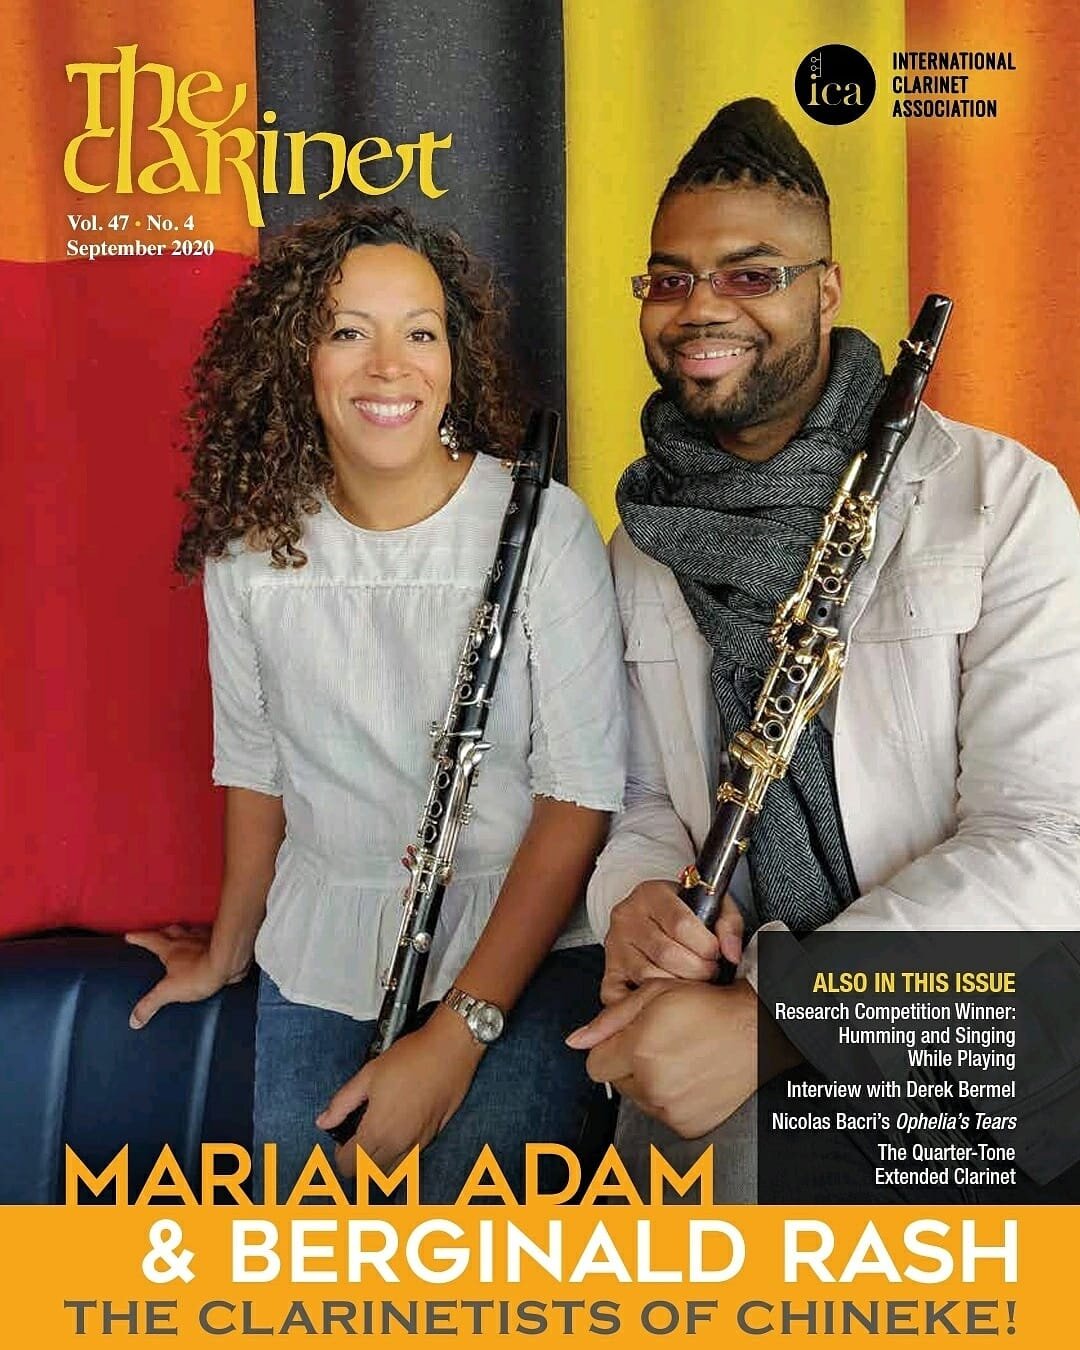  photo credit Matthew Higham  cover of Clarinet Magazine  London, UK  Southbank Centre  September 2020 